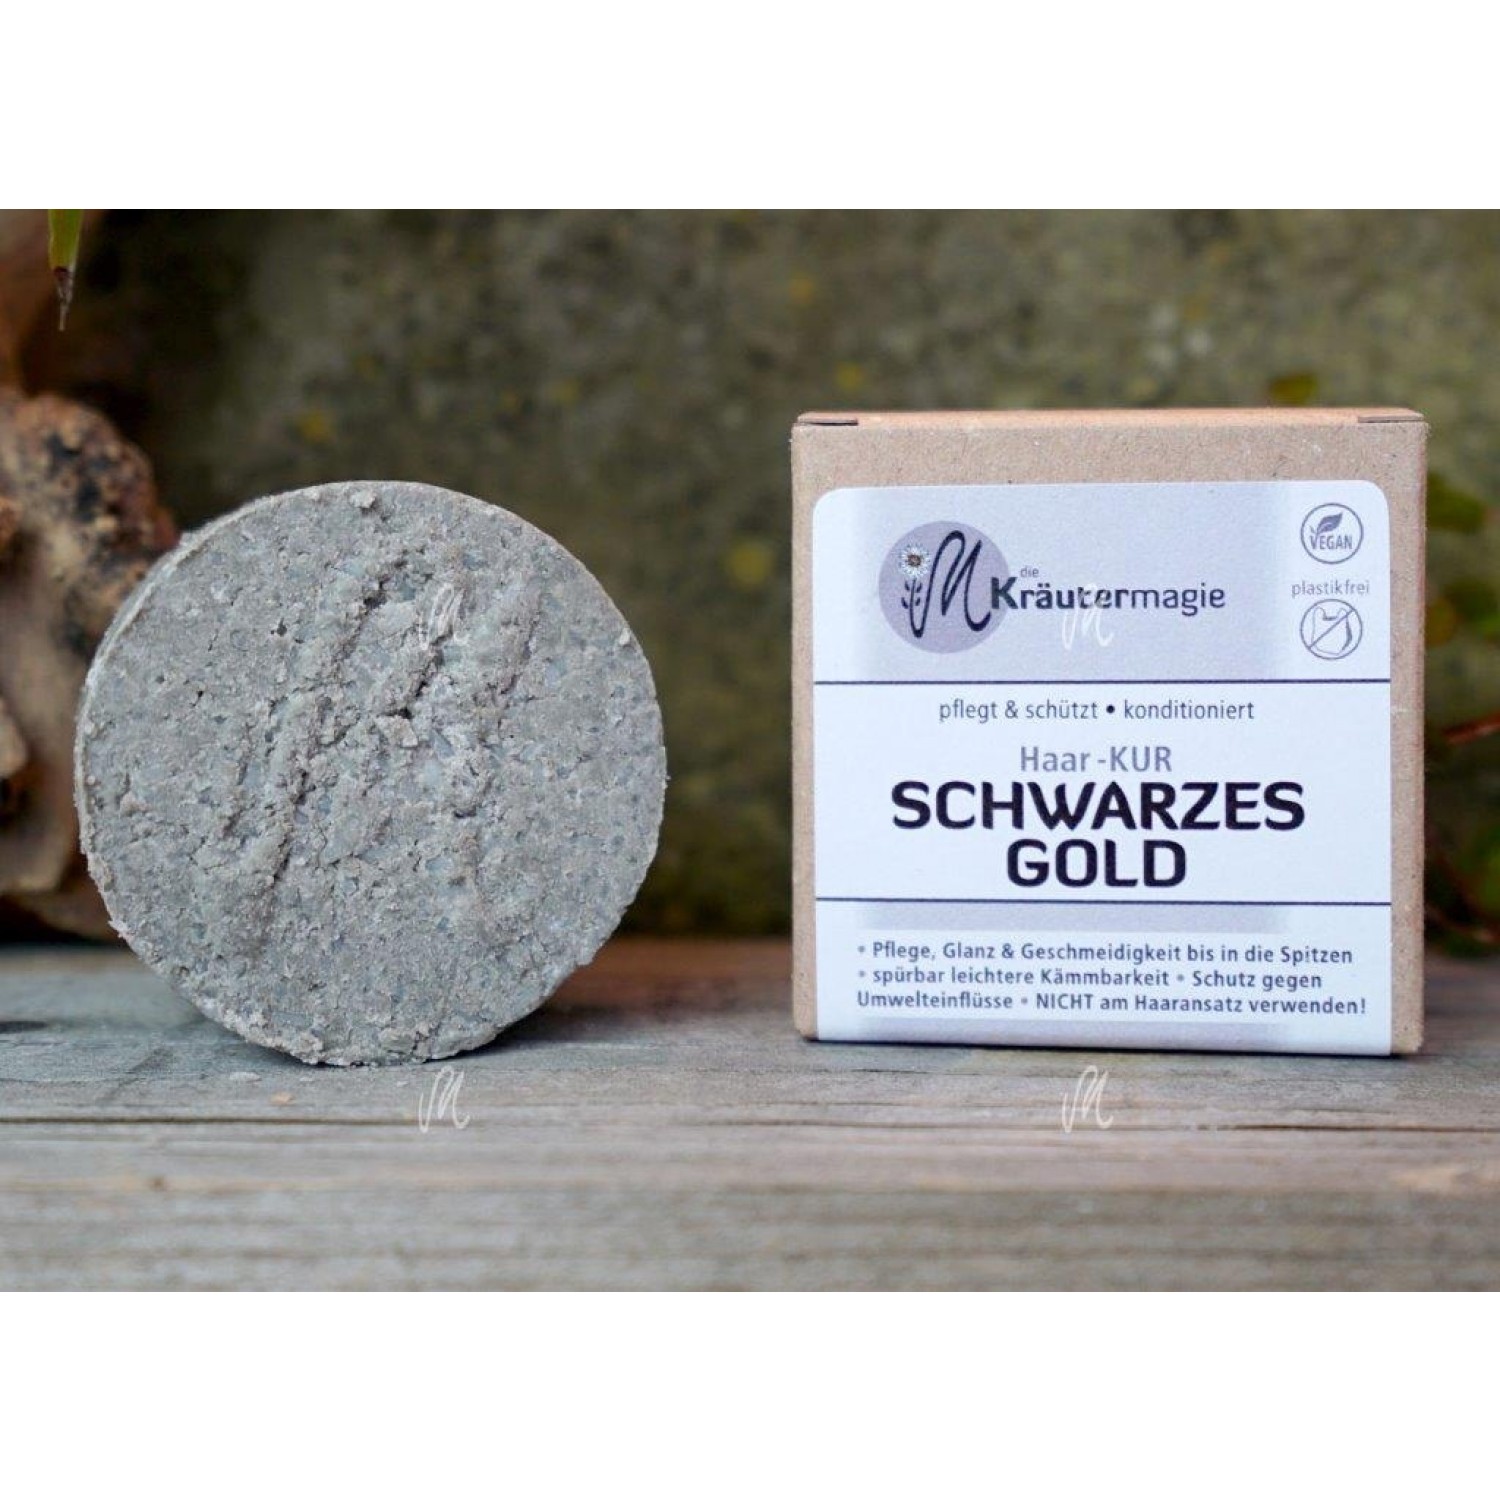 Solid Hair Conditioner Thaler Black Gold for dark hair | Kraeutermagie